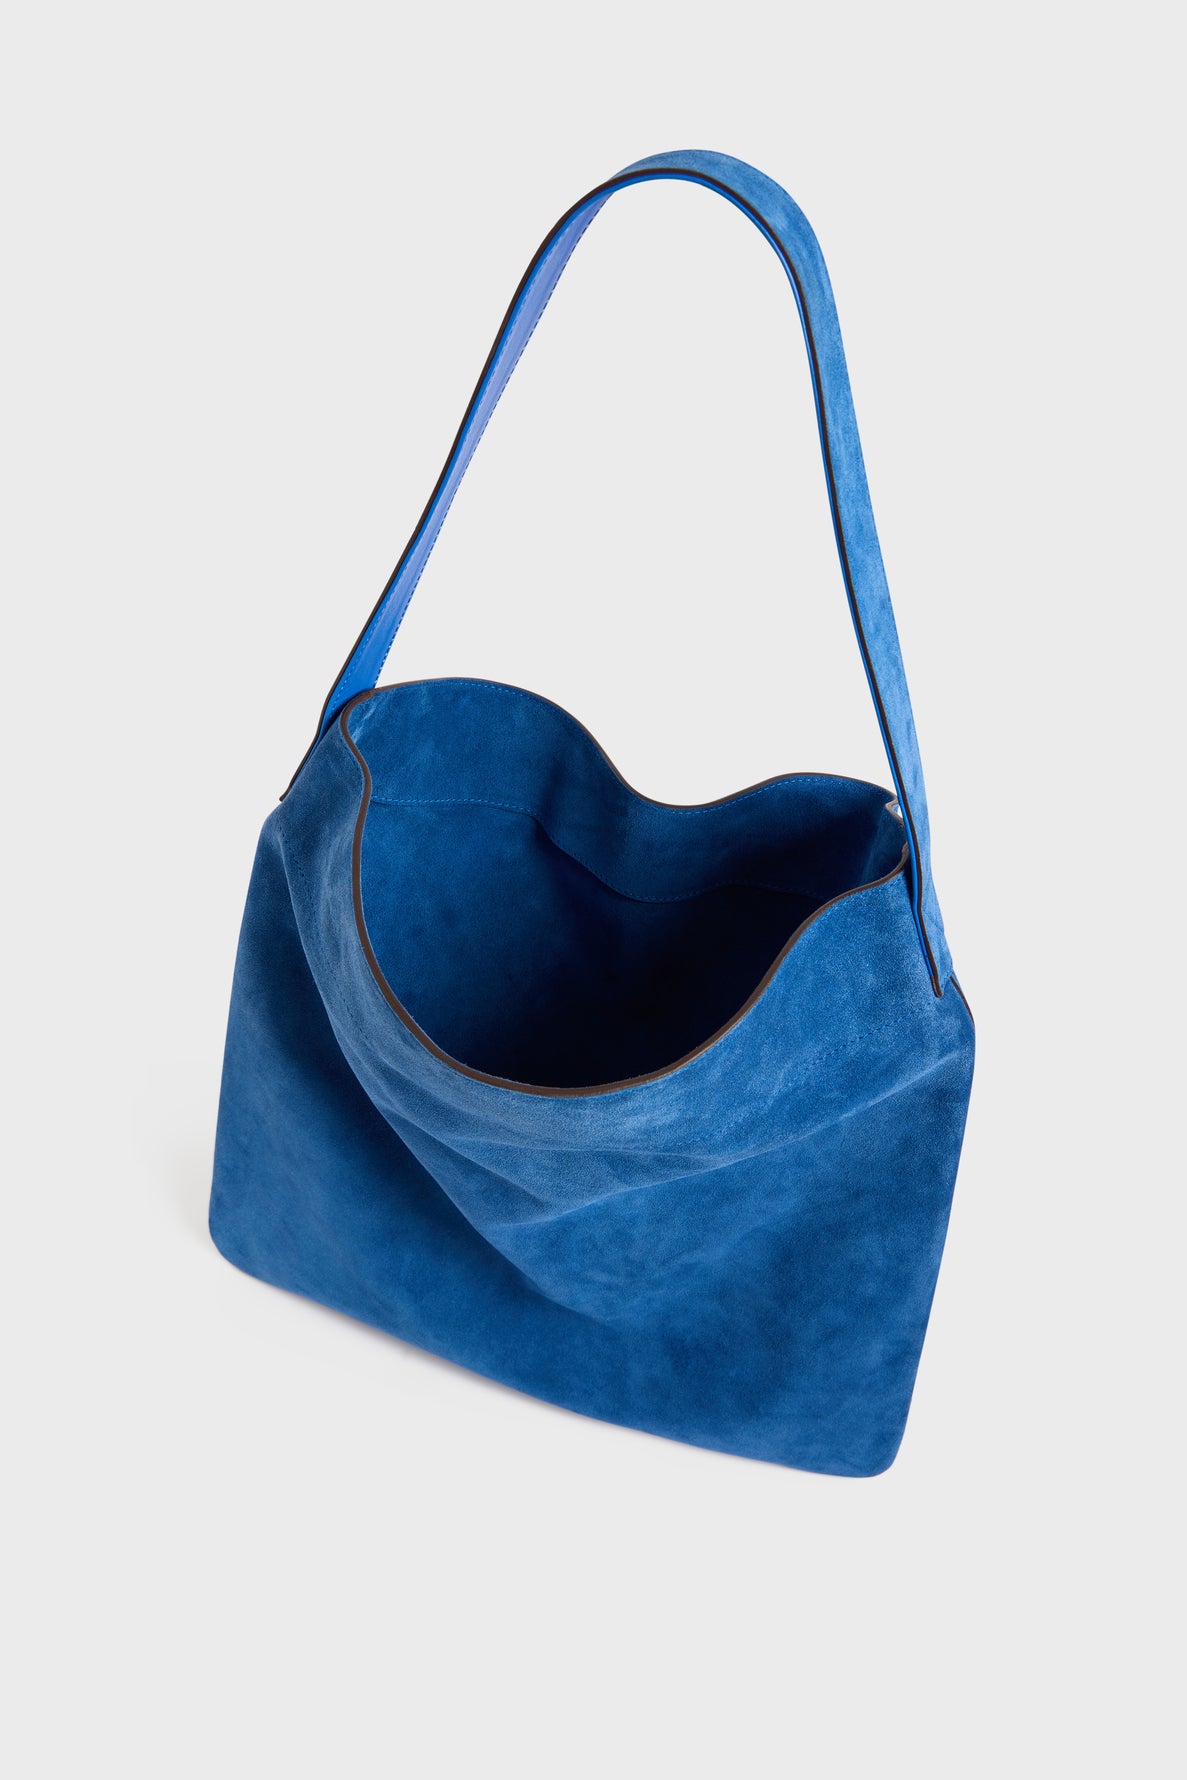 Bag Lady Dzs91g407 Blue